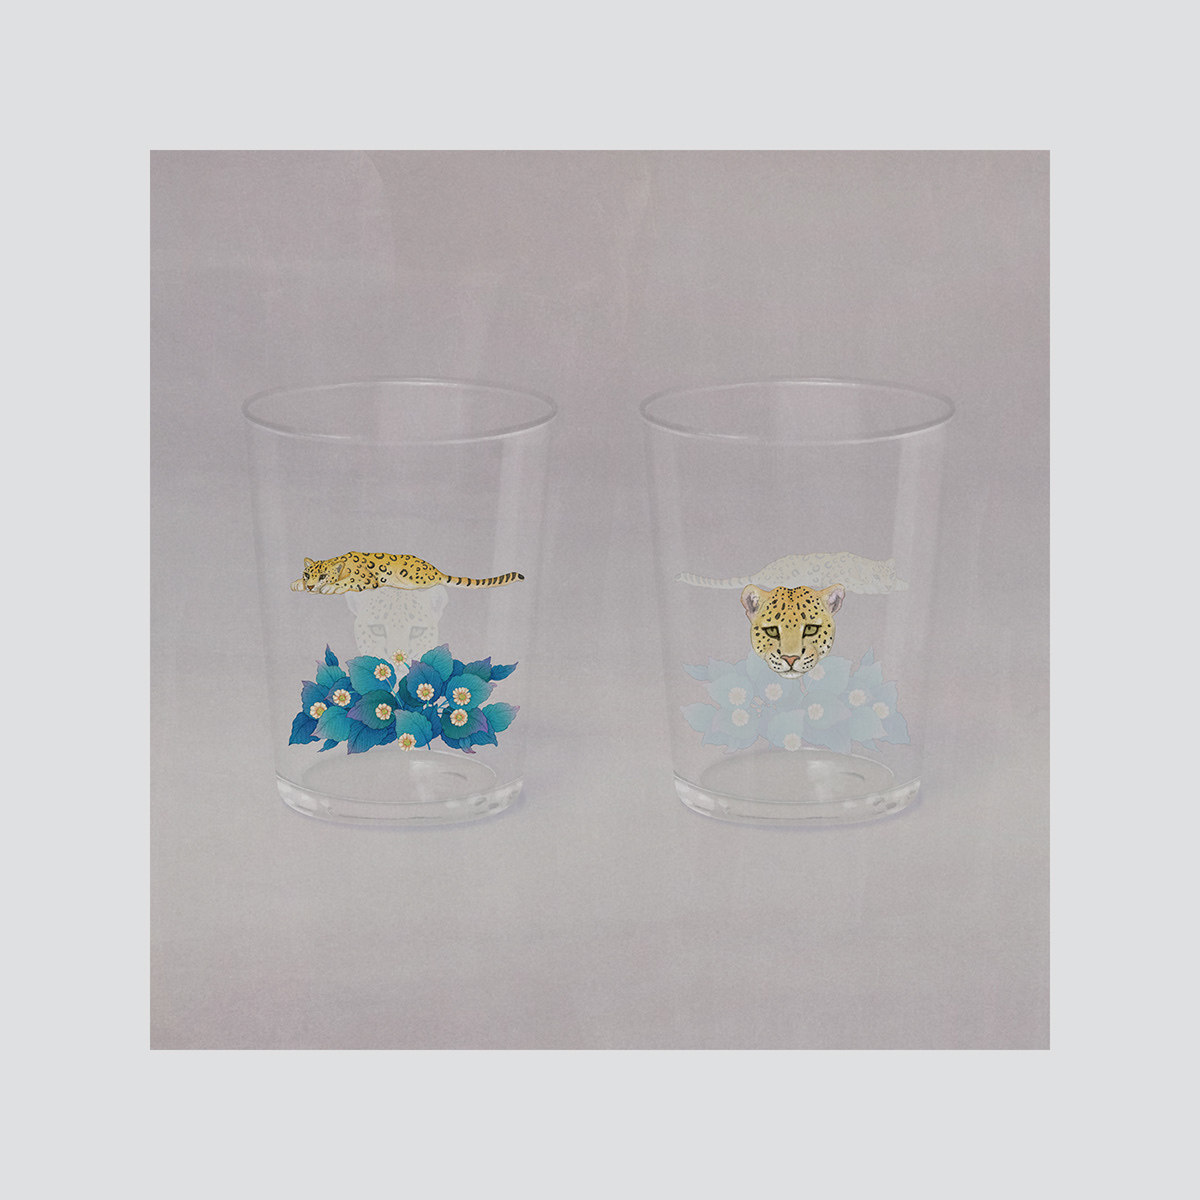 Delicately Illustrated Glassware By Whooli Chen And Di Chun Chen (12)